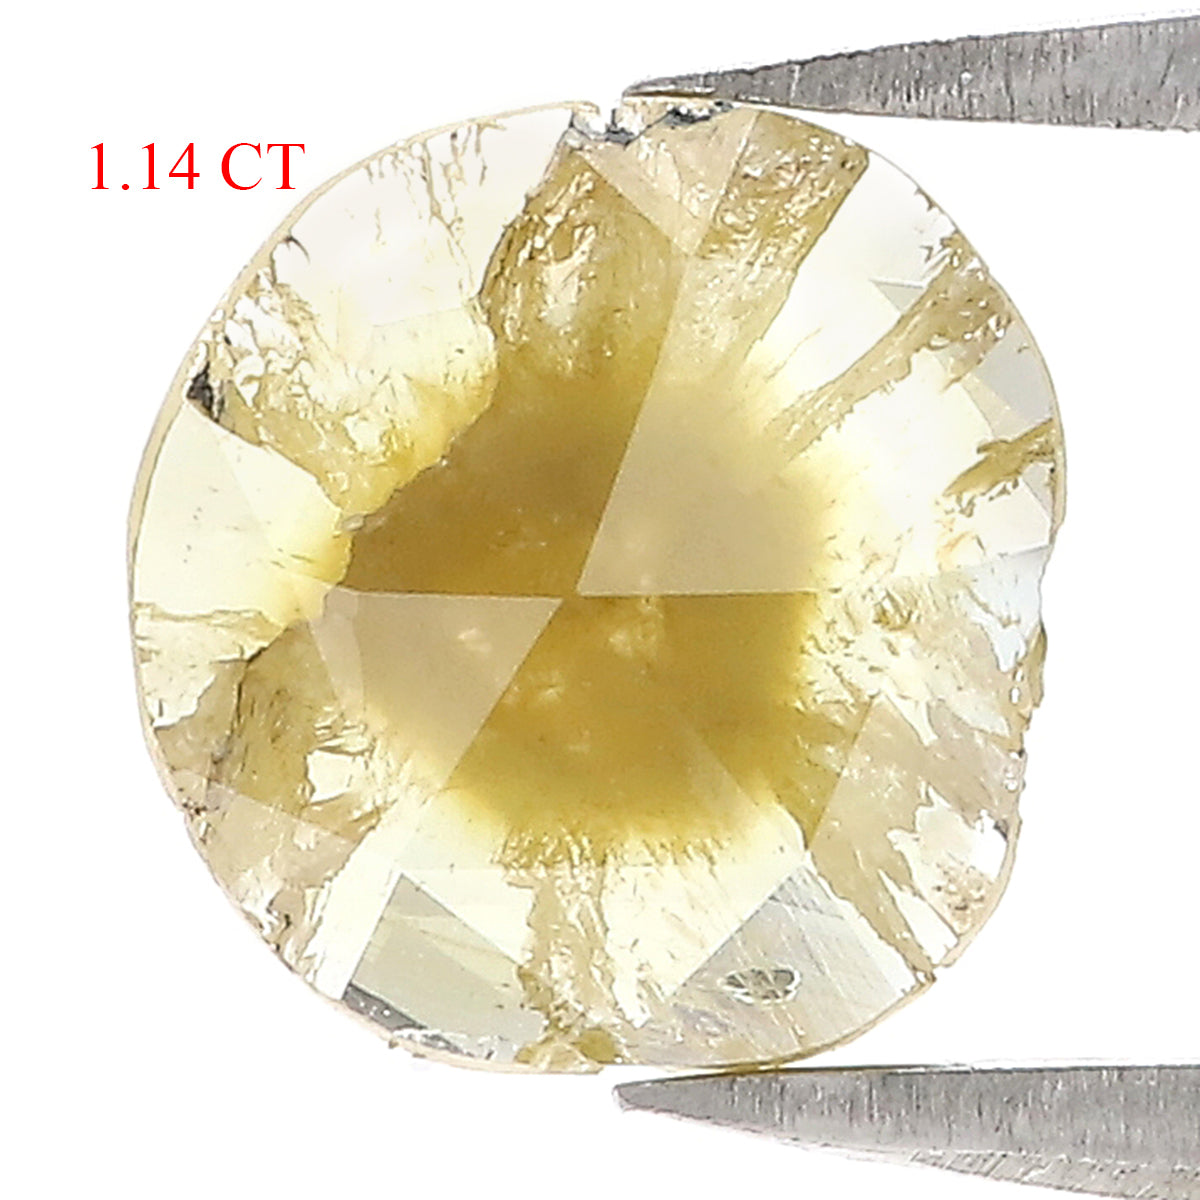 1.14 CT Natural Loose Slice Shape Diamond Yellow Color Irregular Cut Diamond 8.25 MM Natural Loose Diamond Slice Rose Cut Diamond LQ3025